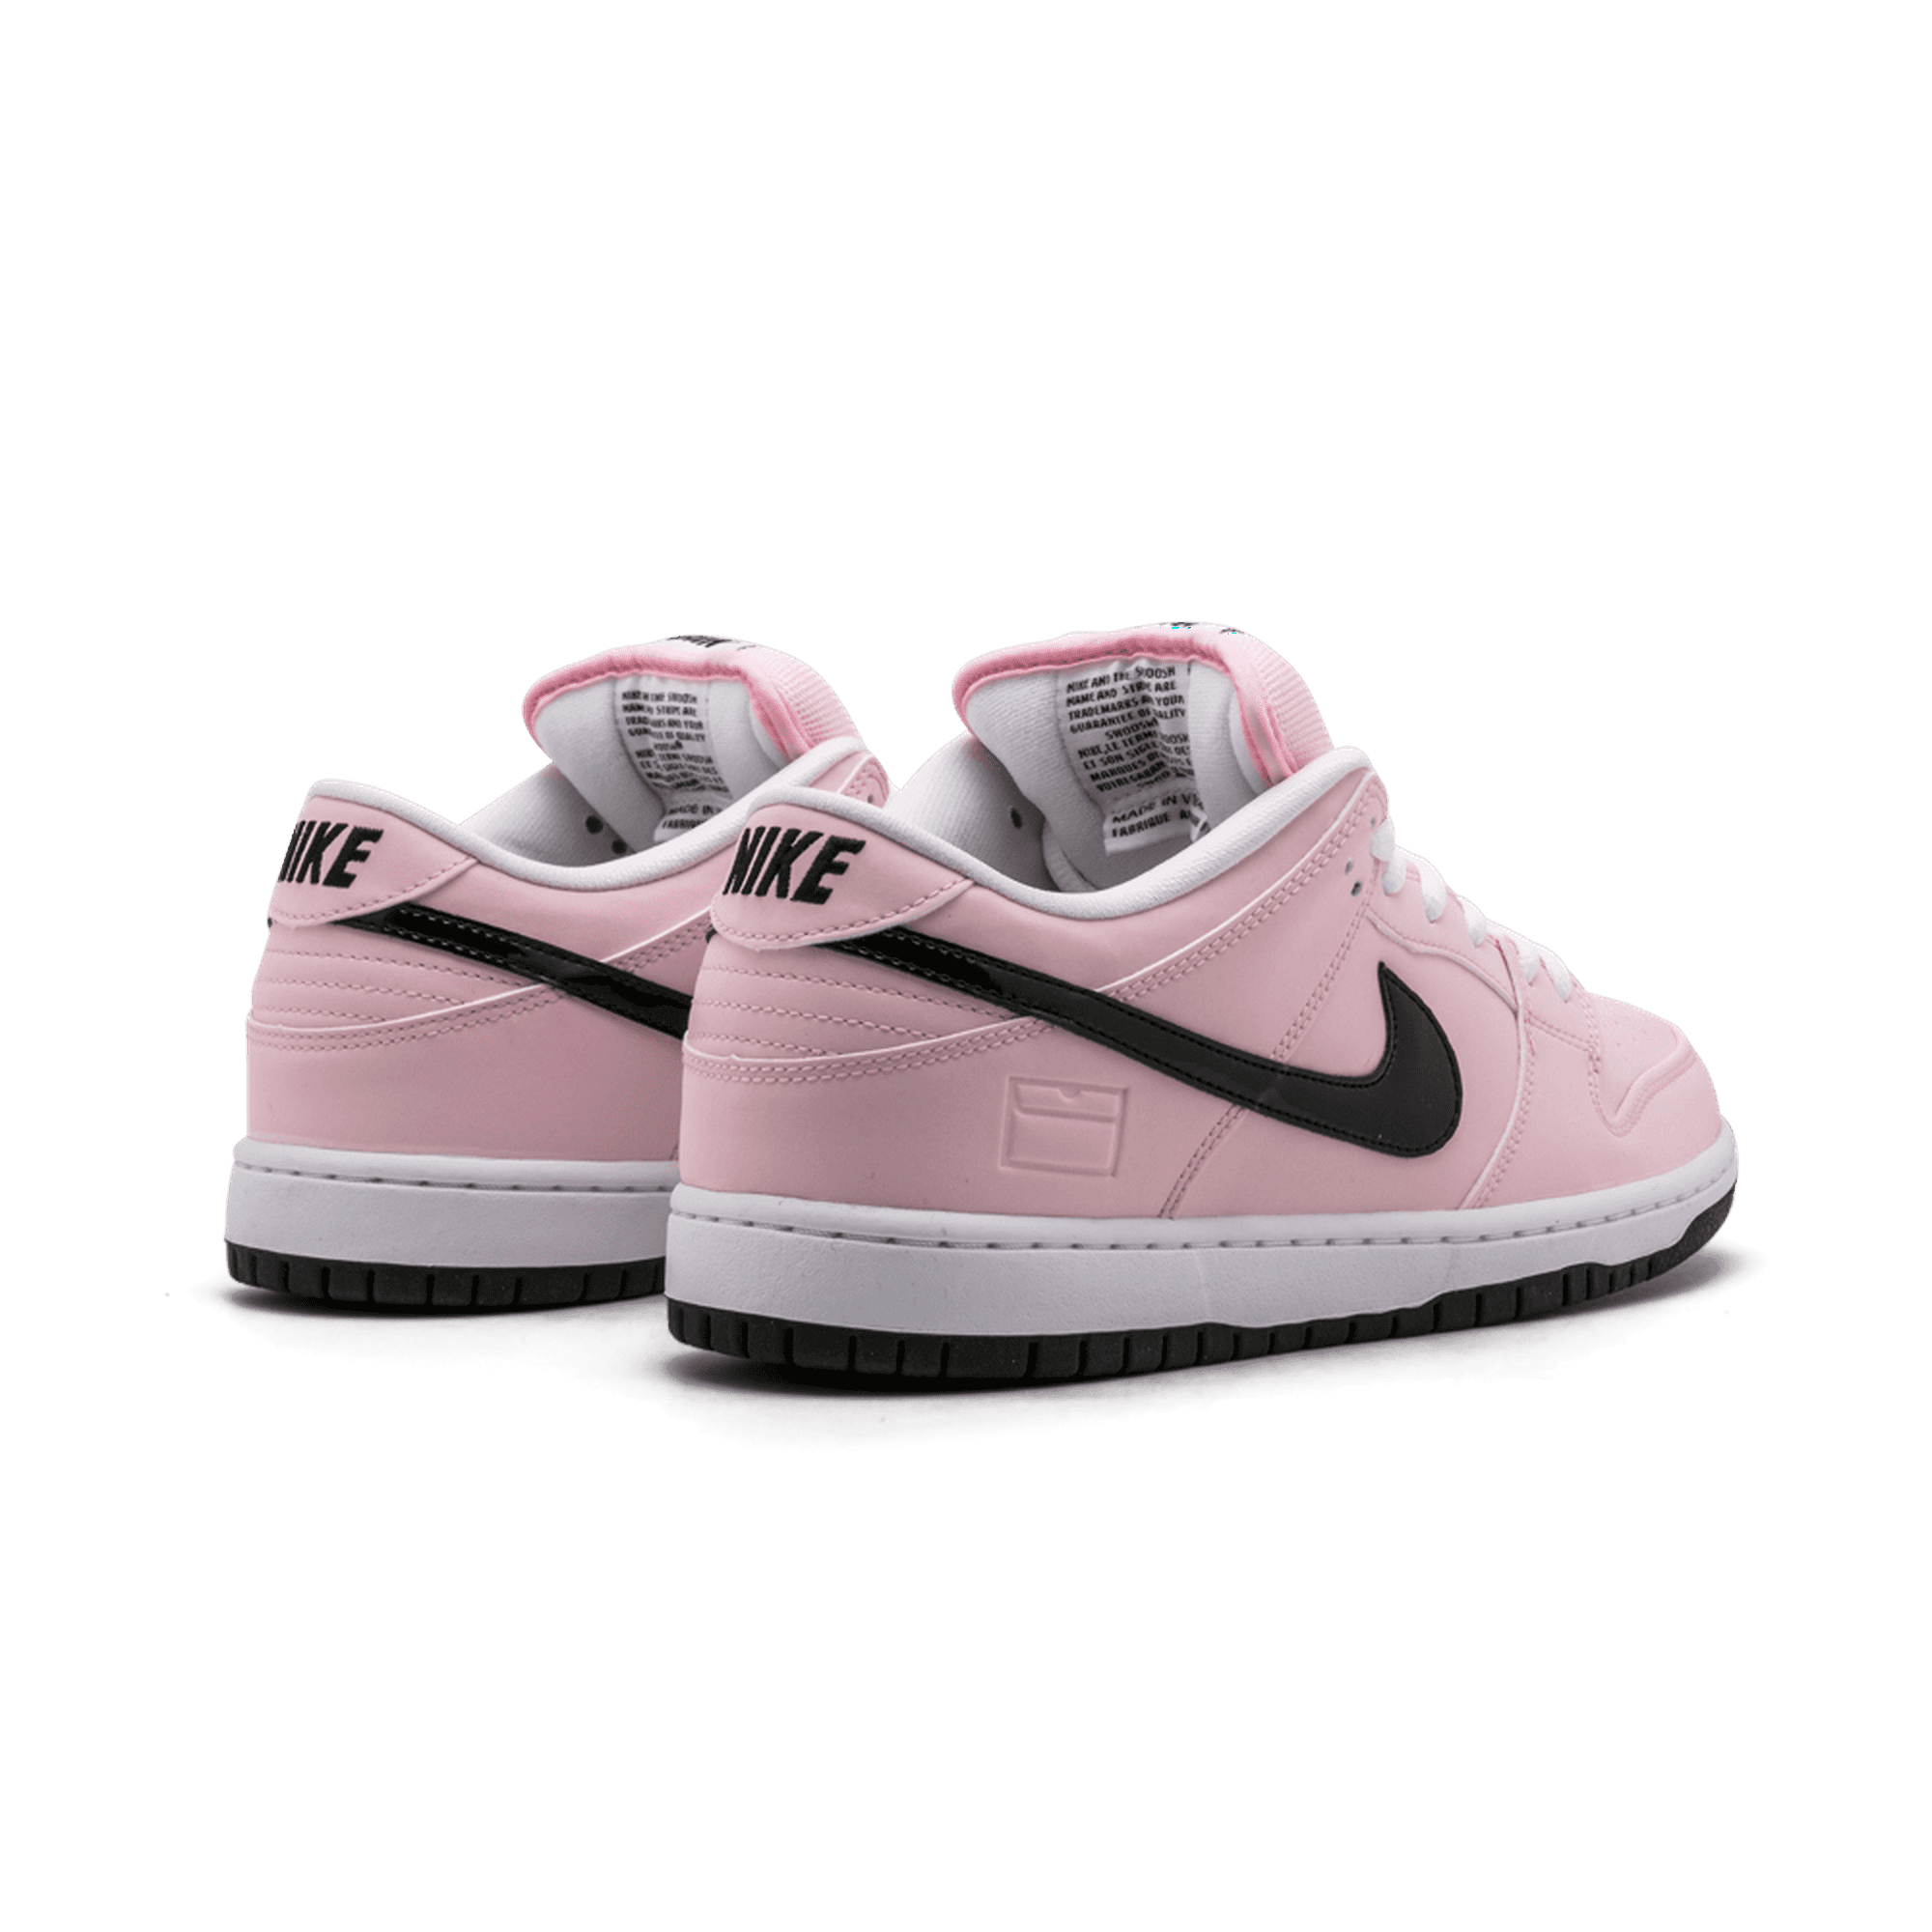 Nike - Men - Dunk Low Elite Sb 'Pink Box' - 833474-601 - Size 10 